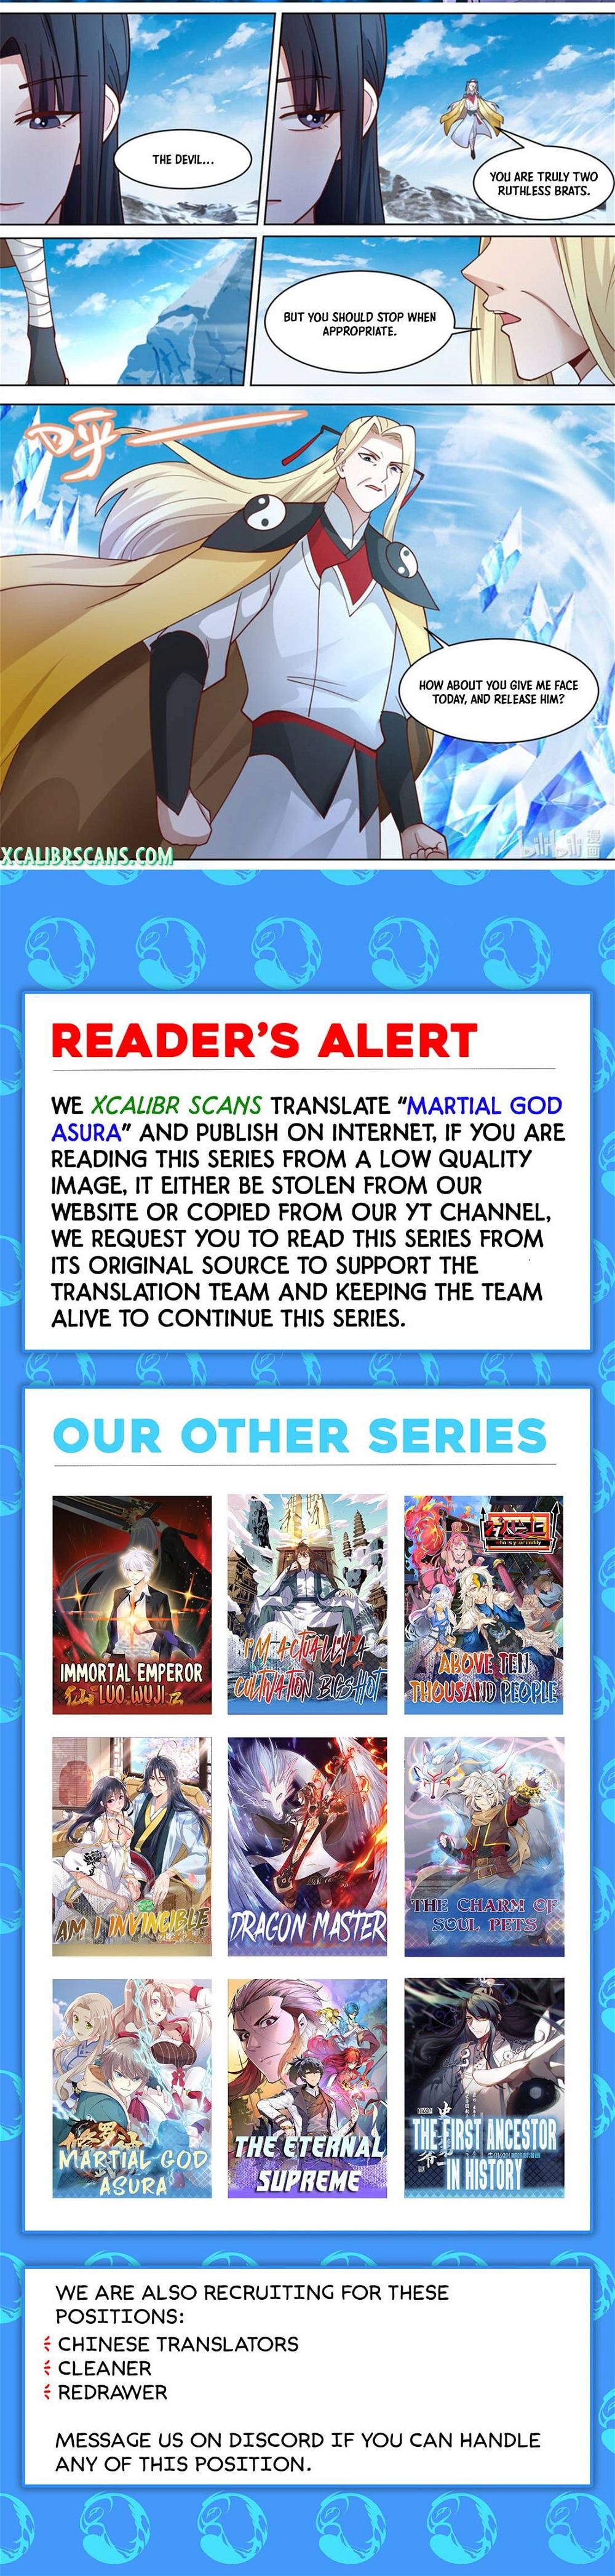 Martial God Asura Chapter 554 - Page 10